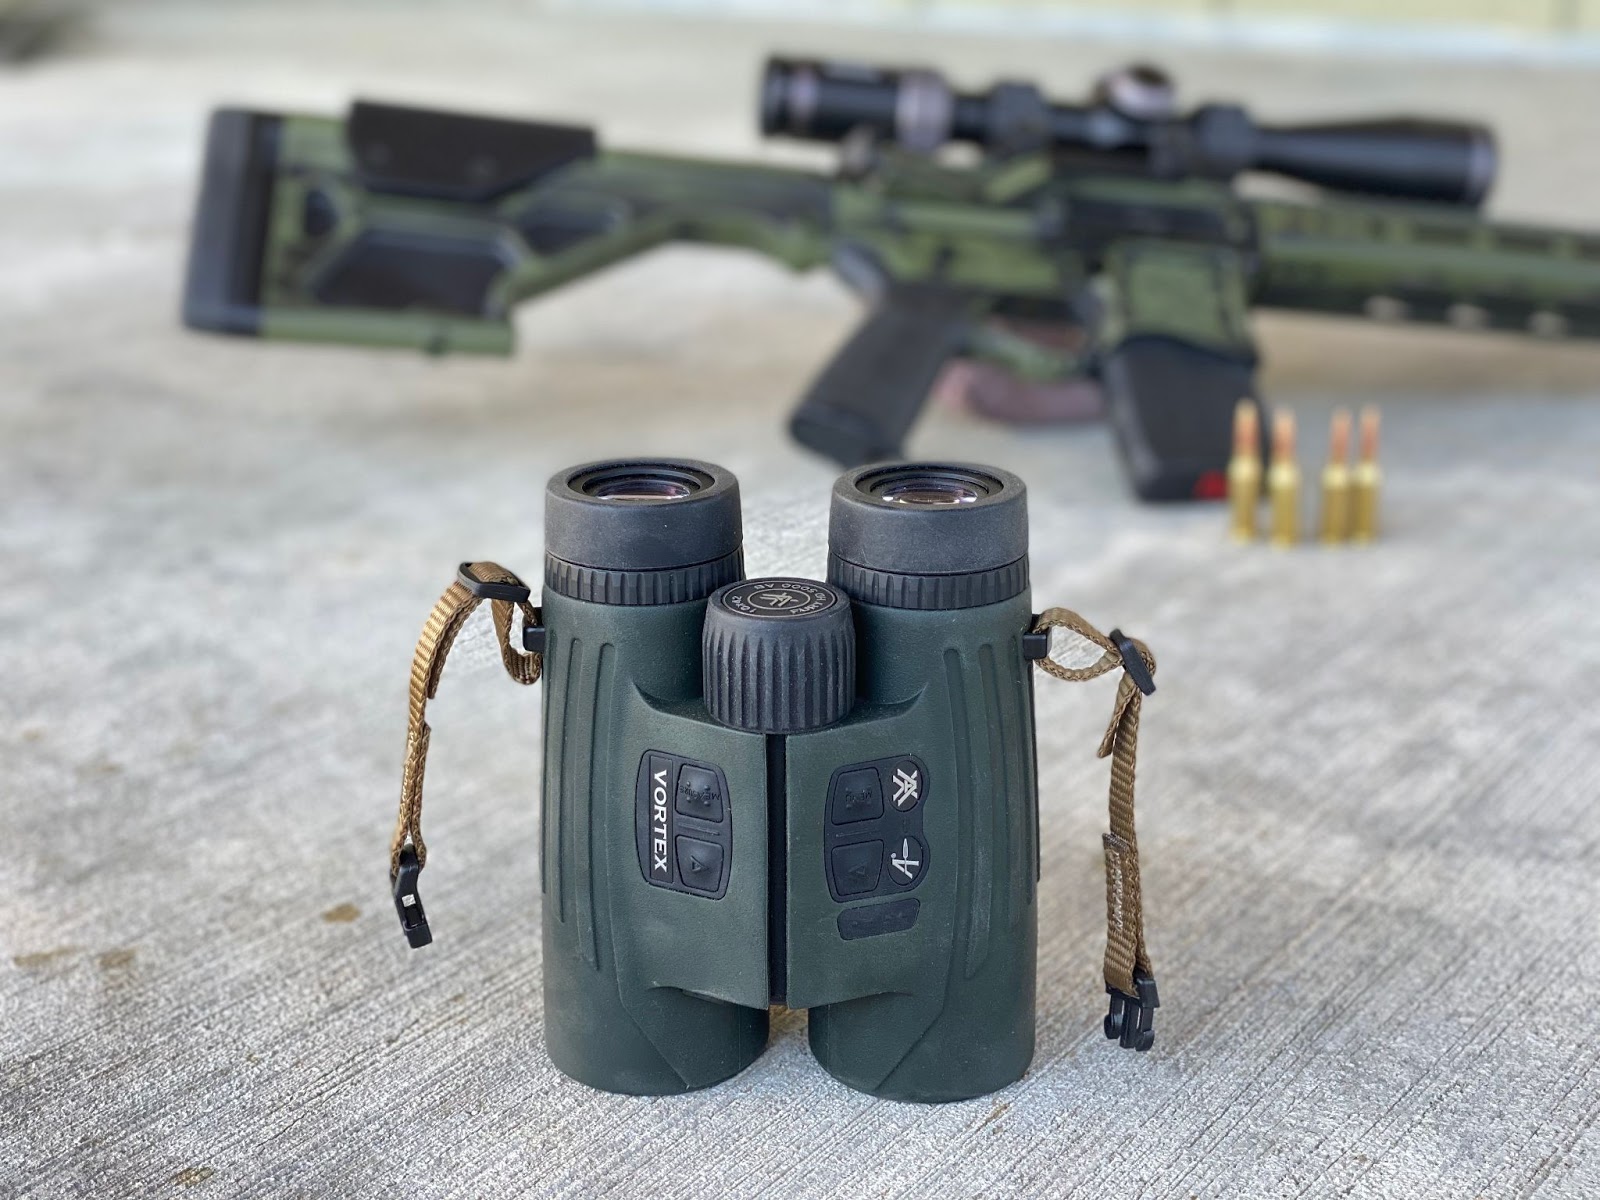 The Vortex Fury HD AB 5000 ranges, spots and calculates ballistics.